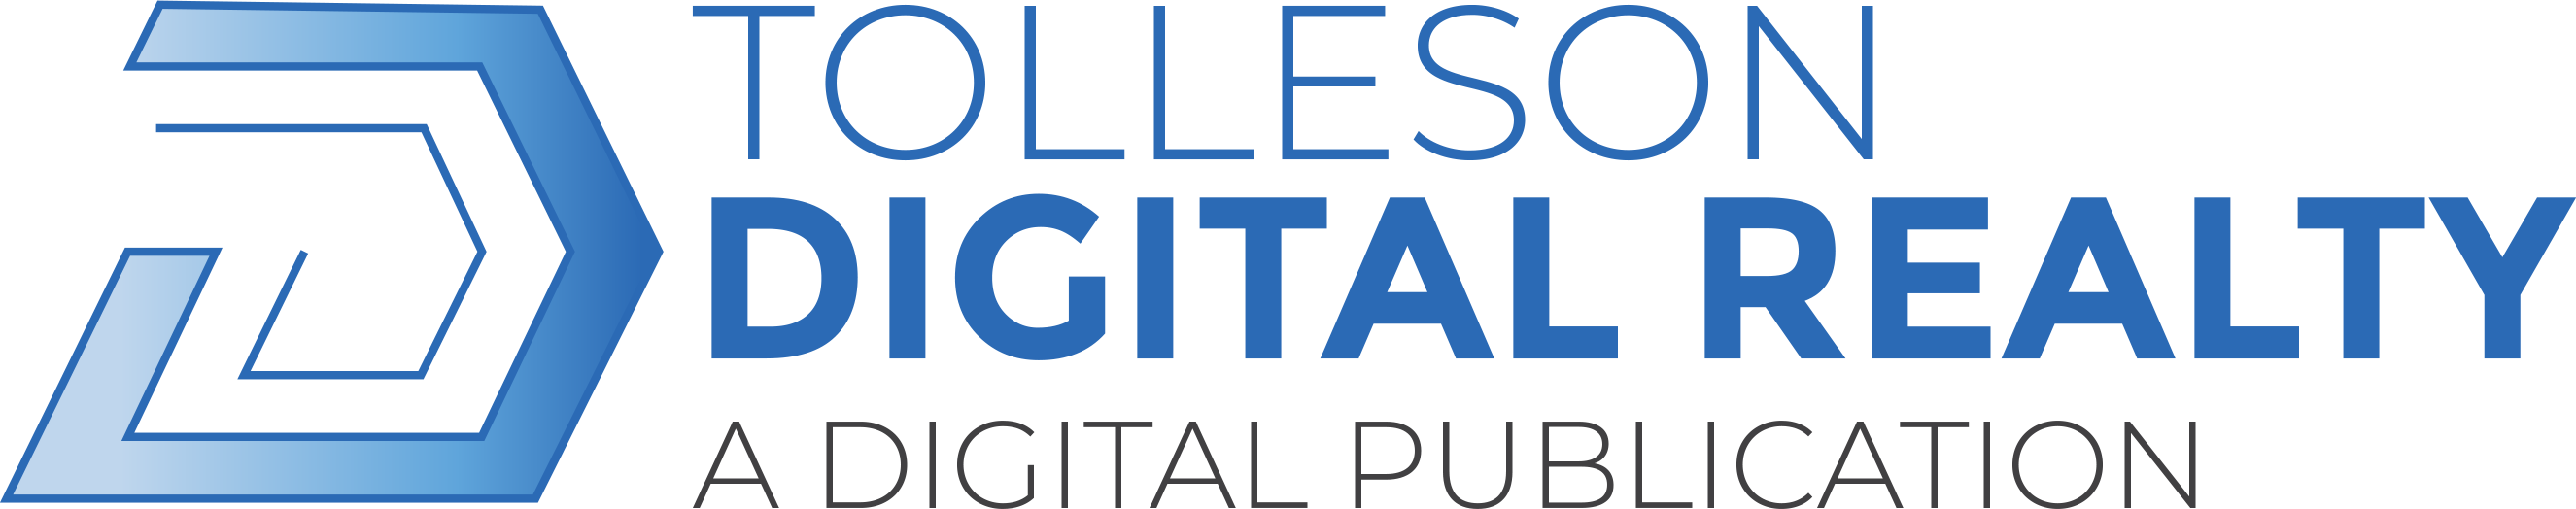 Tolleson Digital Realty Logo